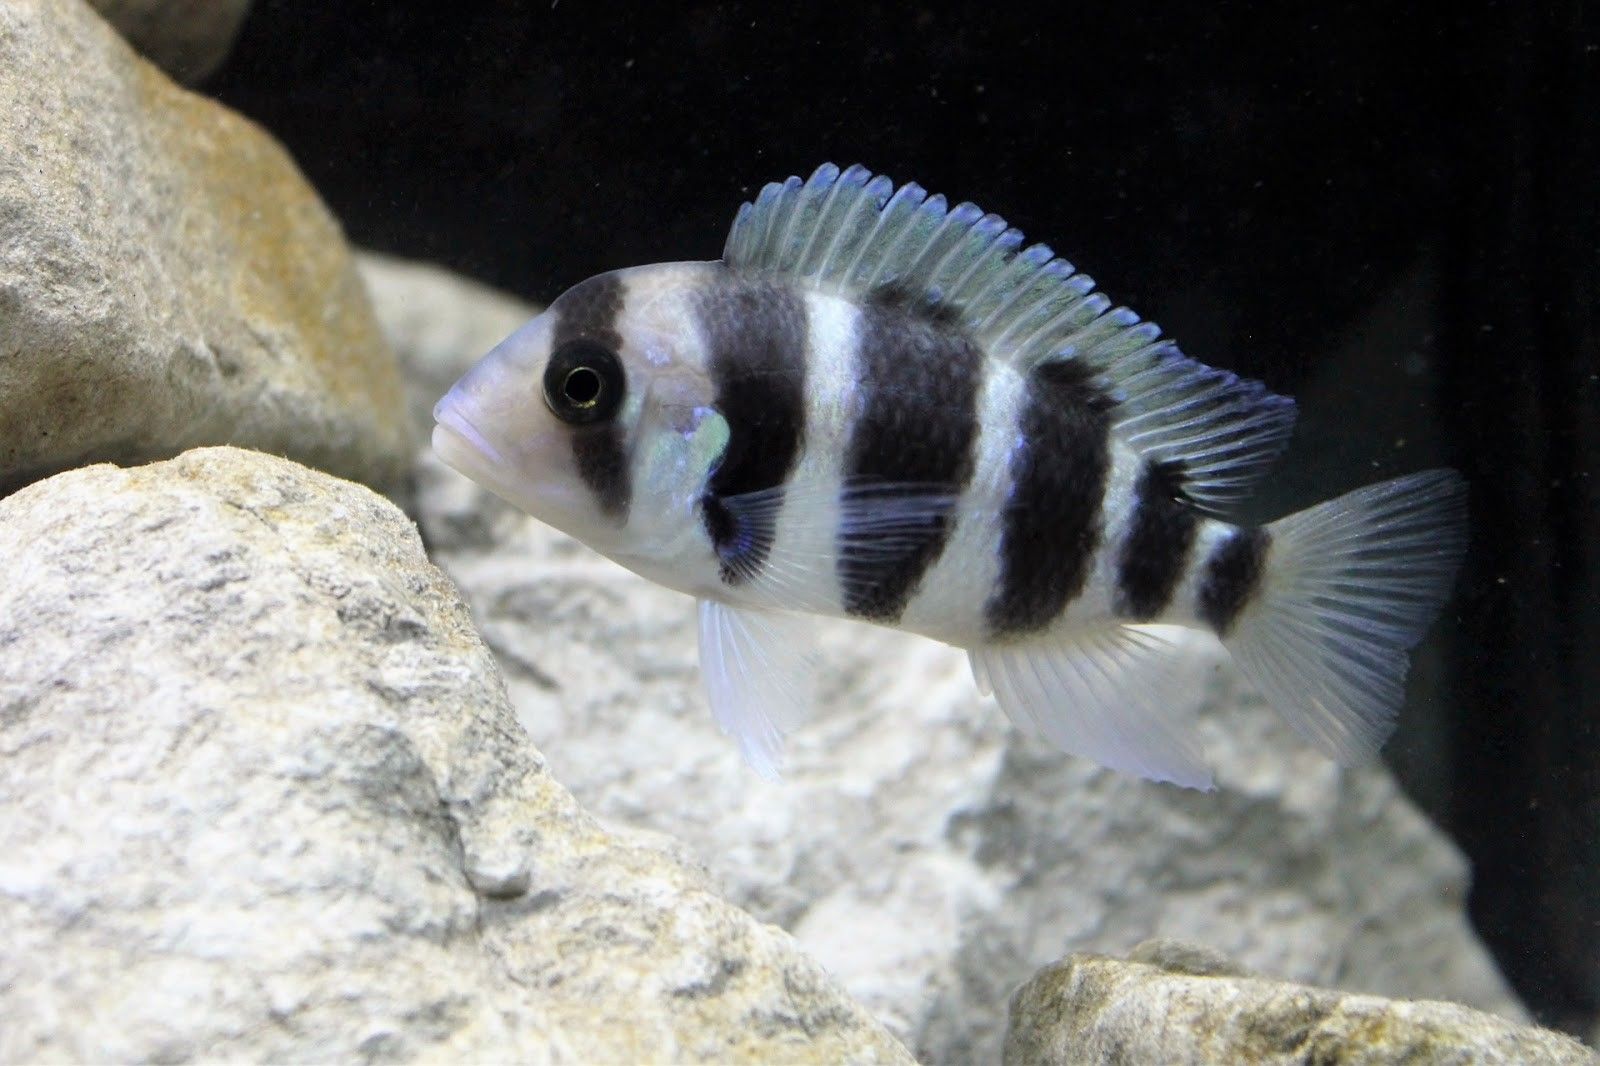 Frontosa cichlid (Cyphotilapia frontosa) aquarium fish